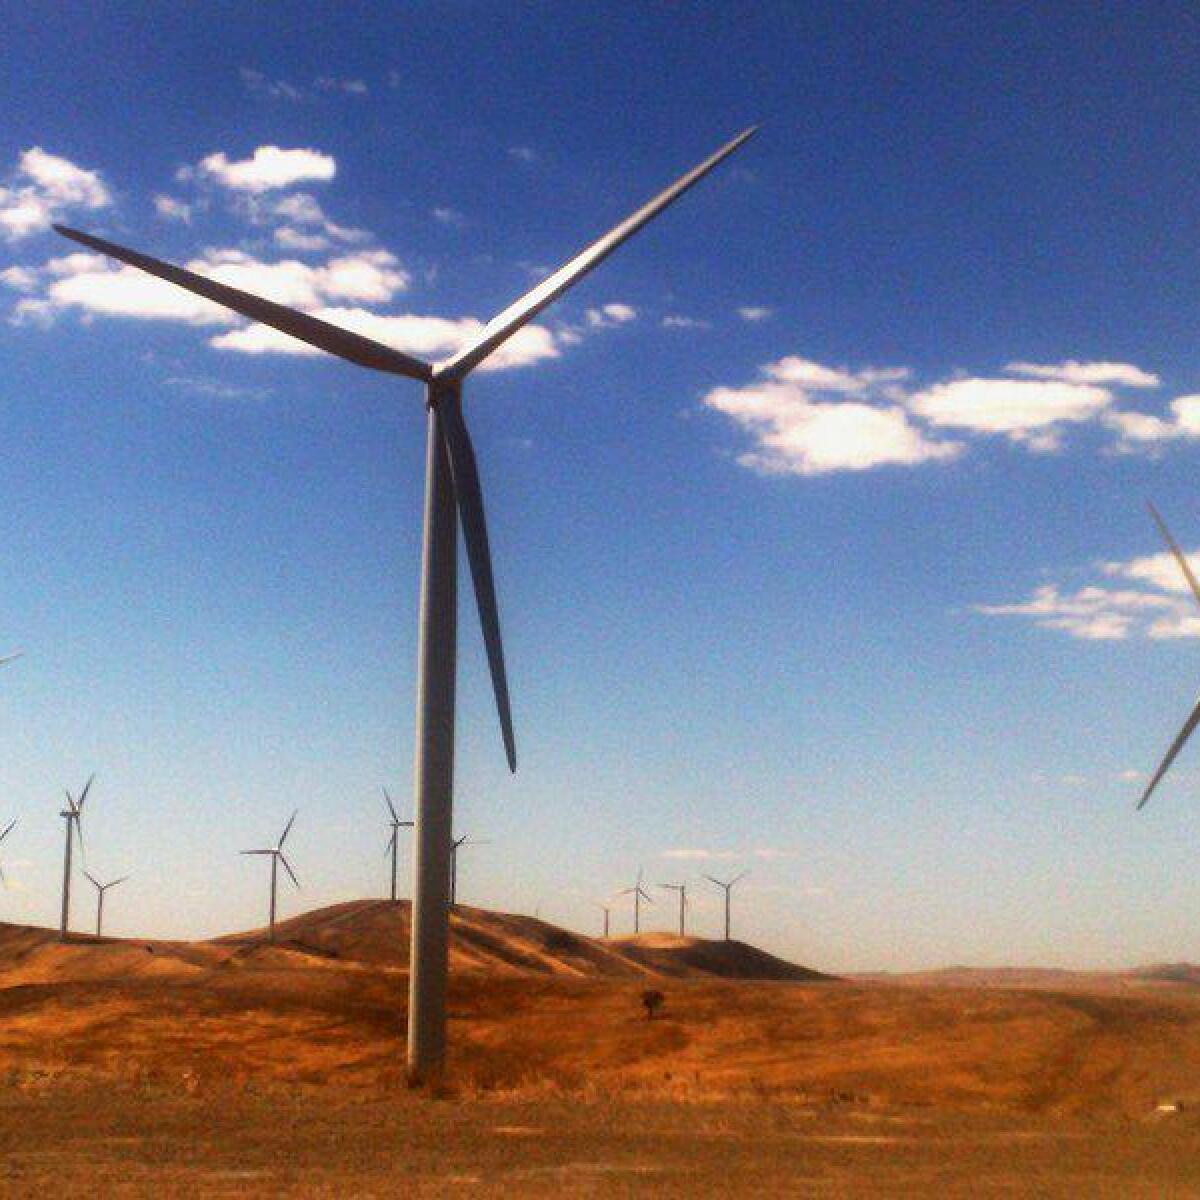 A windfarm is pictured near Burra, South Australia